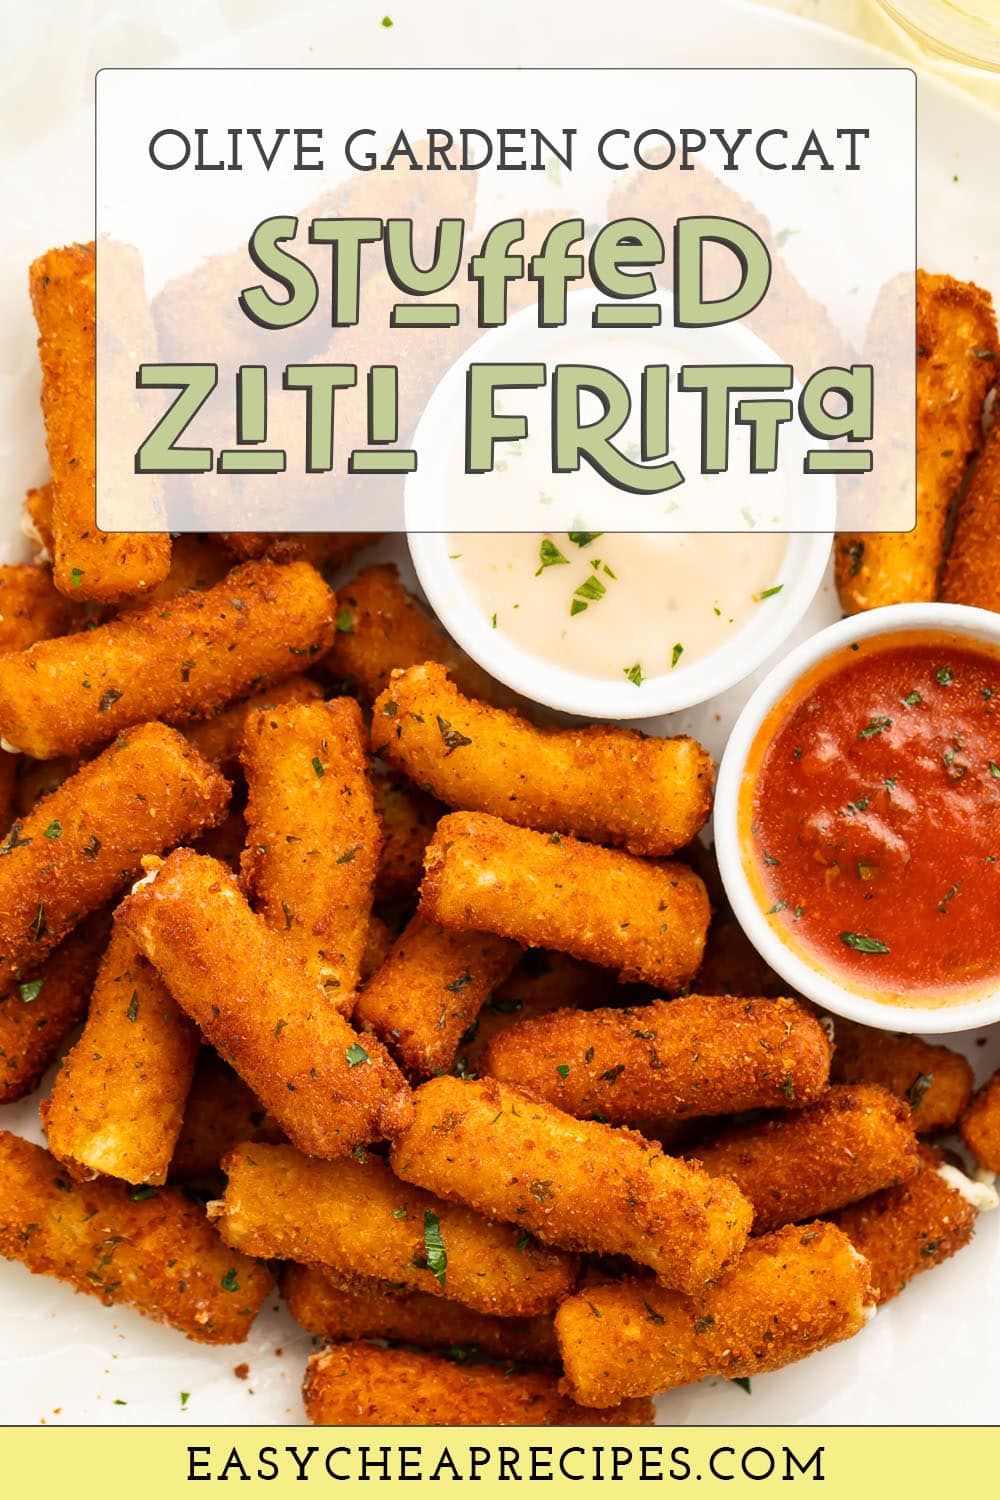 Pin graphic for stuffed ziti fritta.